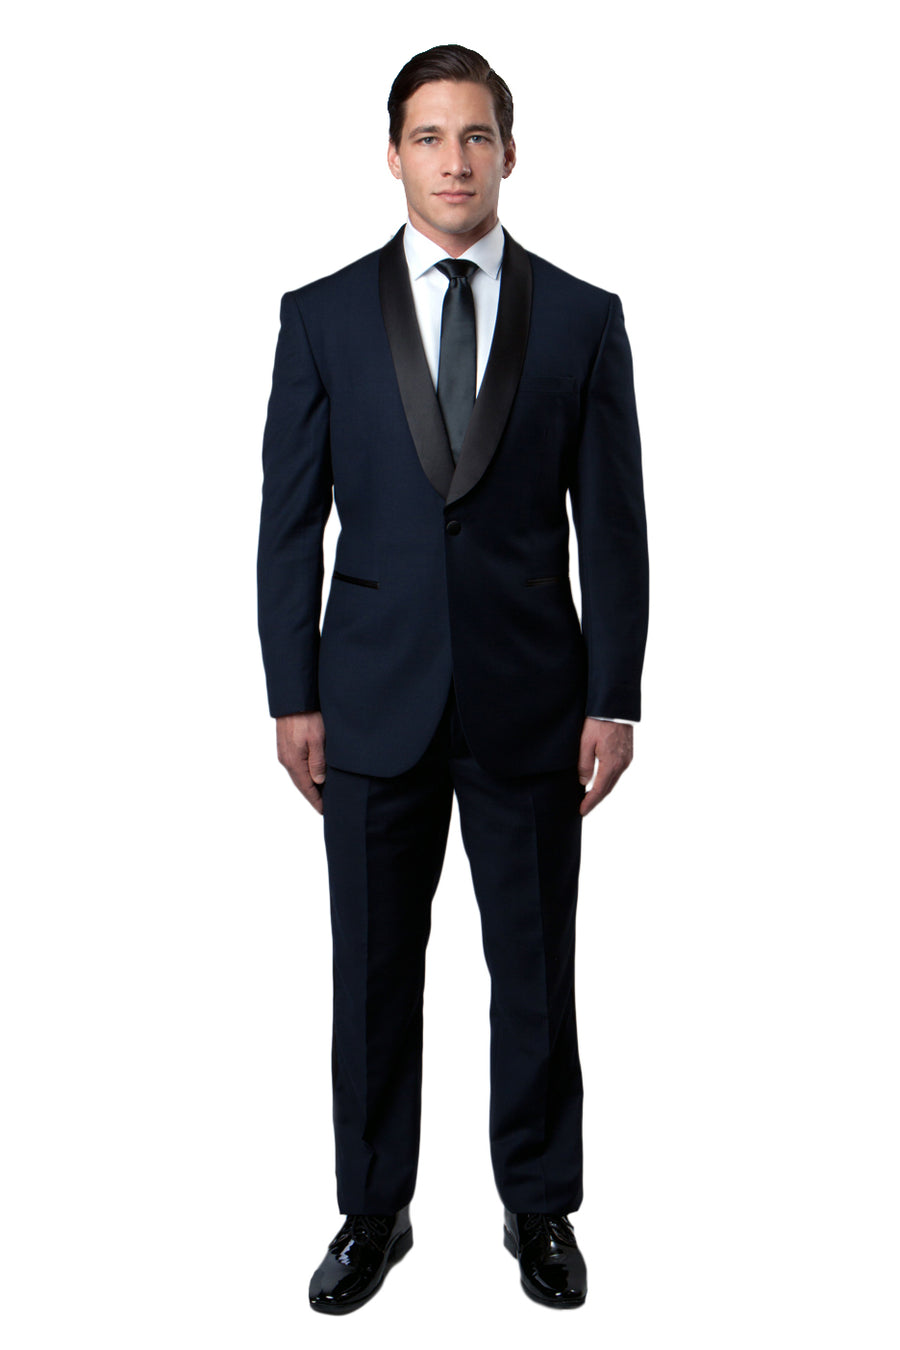 Satin Peak Lapel Tuxedo Solid Slim Fit Prom Tuxedos For Men - New York Man Suits